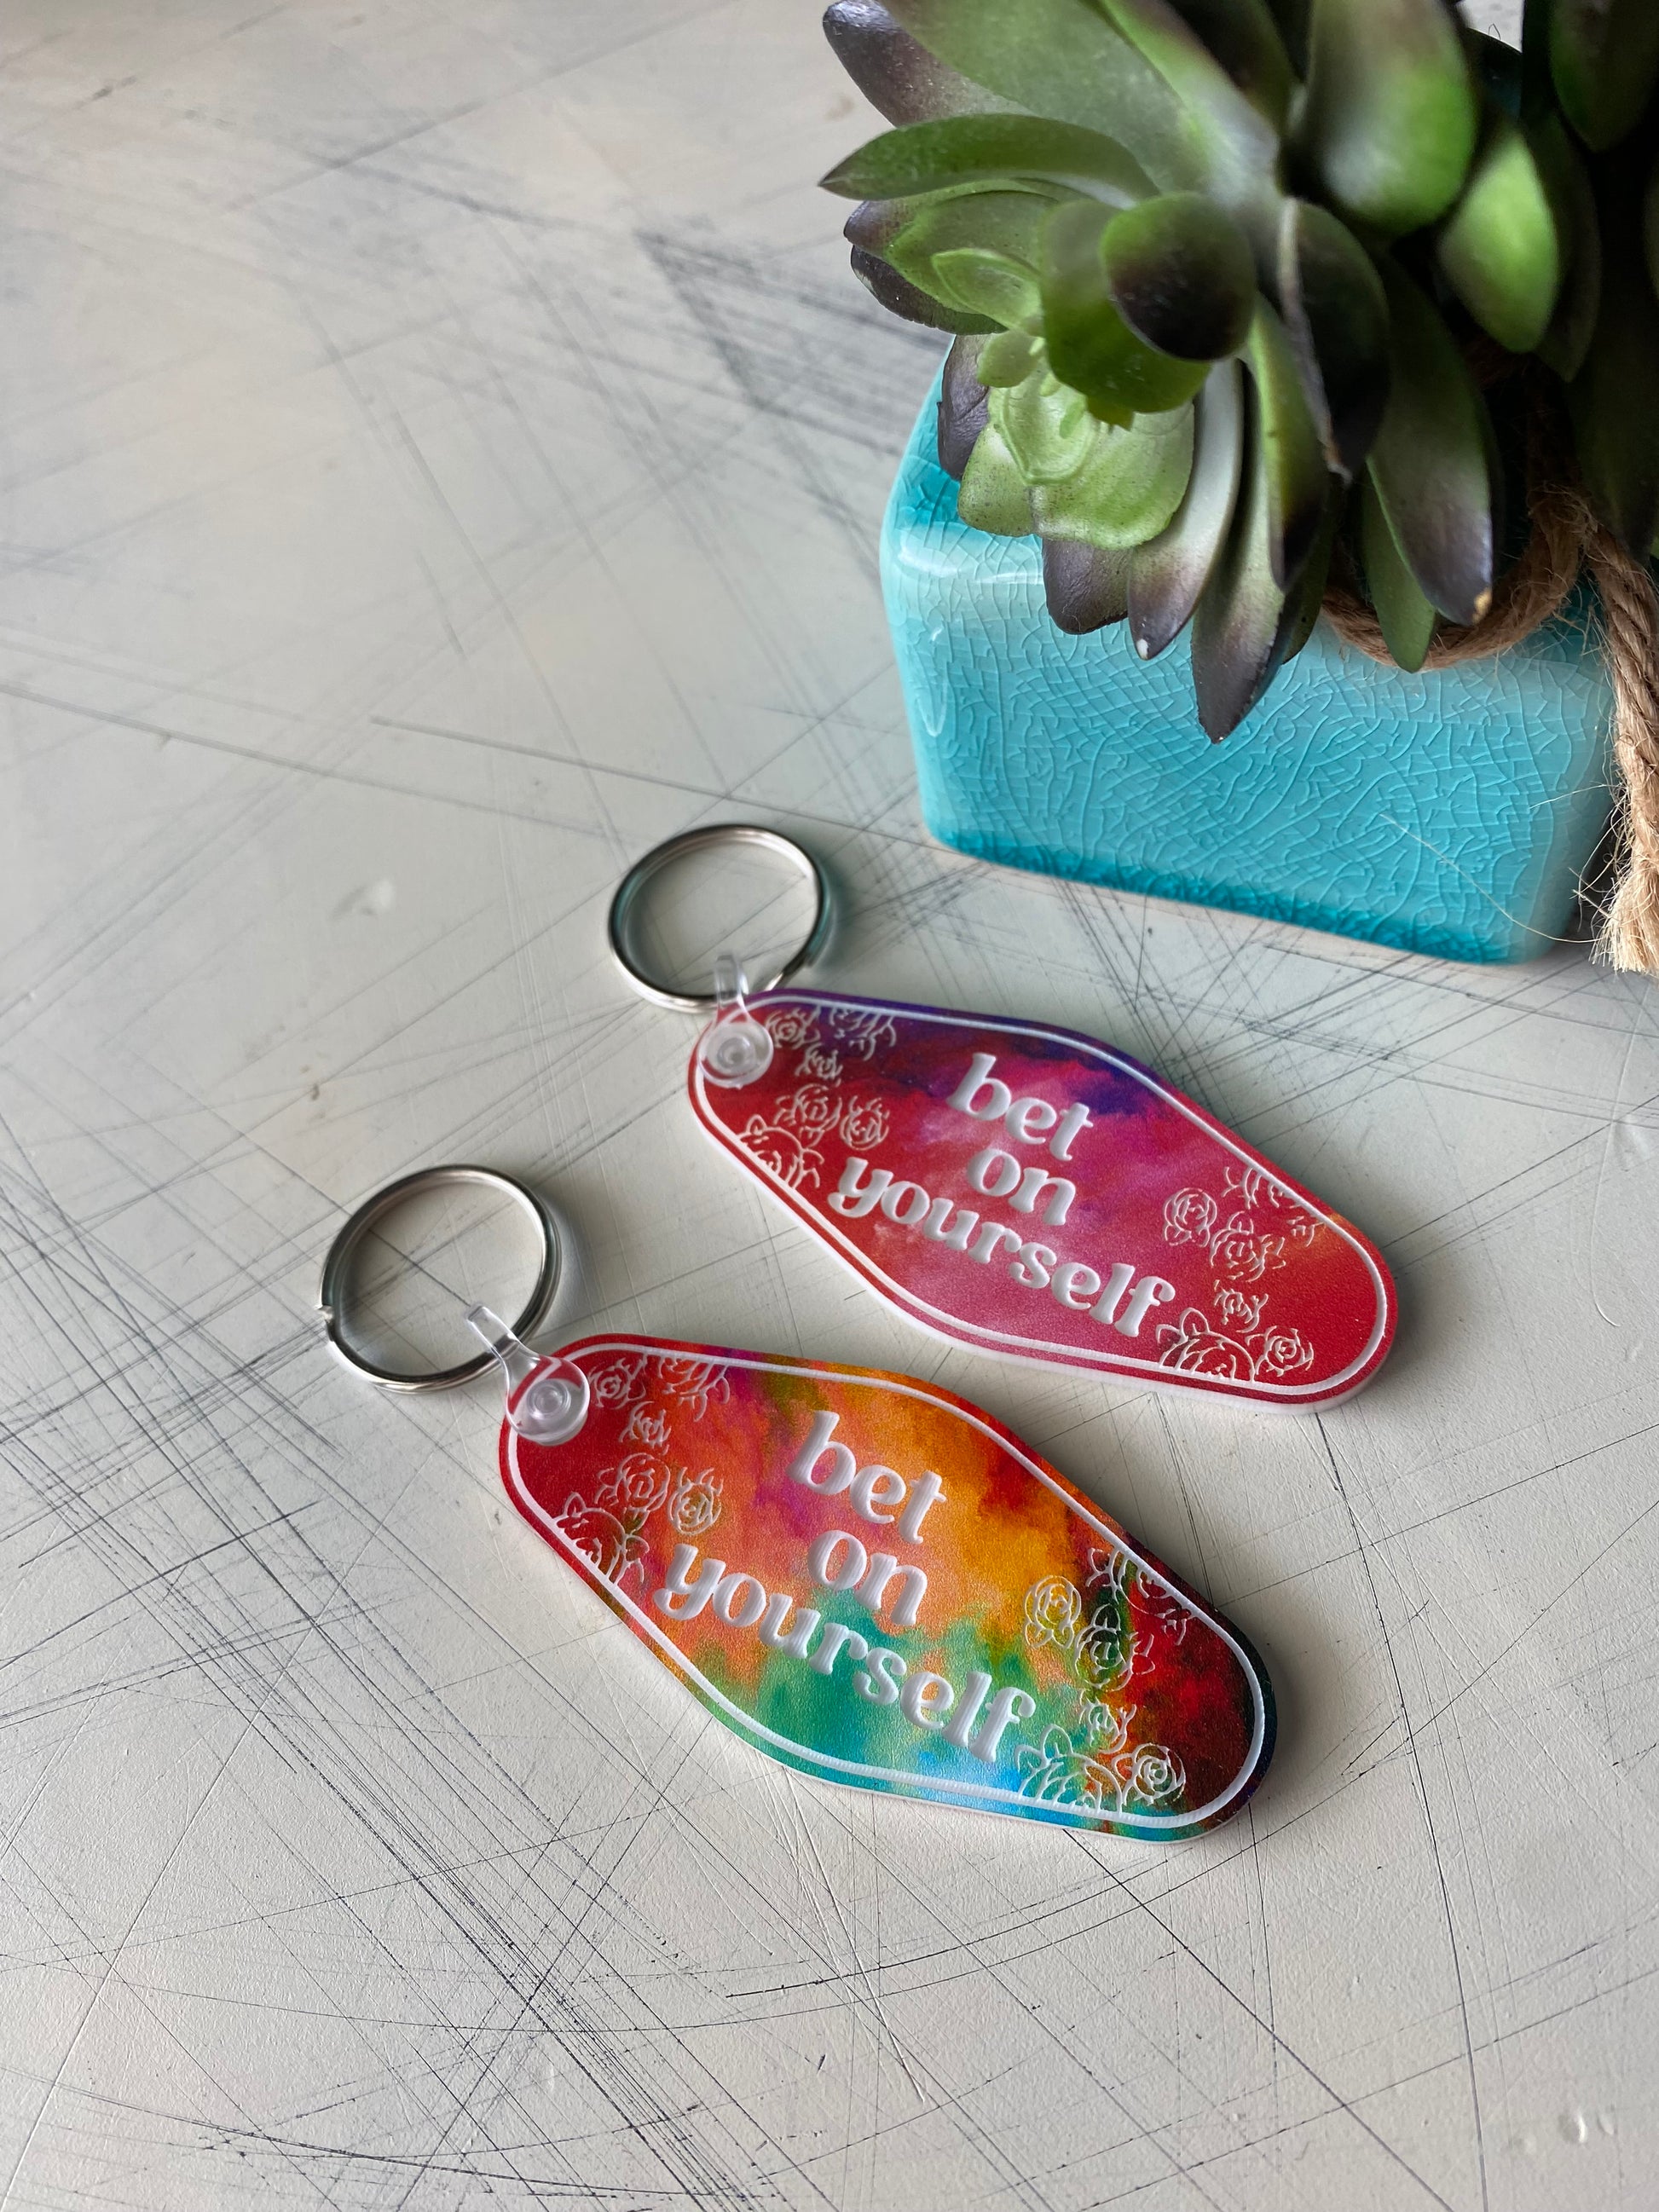 bet on yourself - Novotny Designs rainbow acrylic motel-style keychain